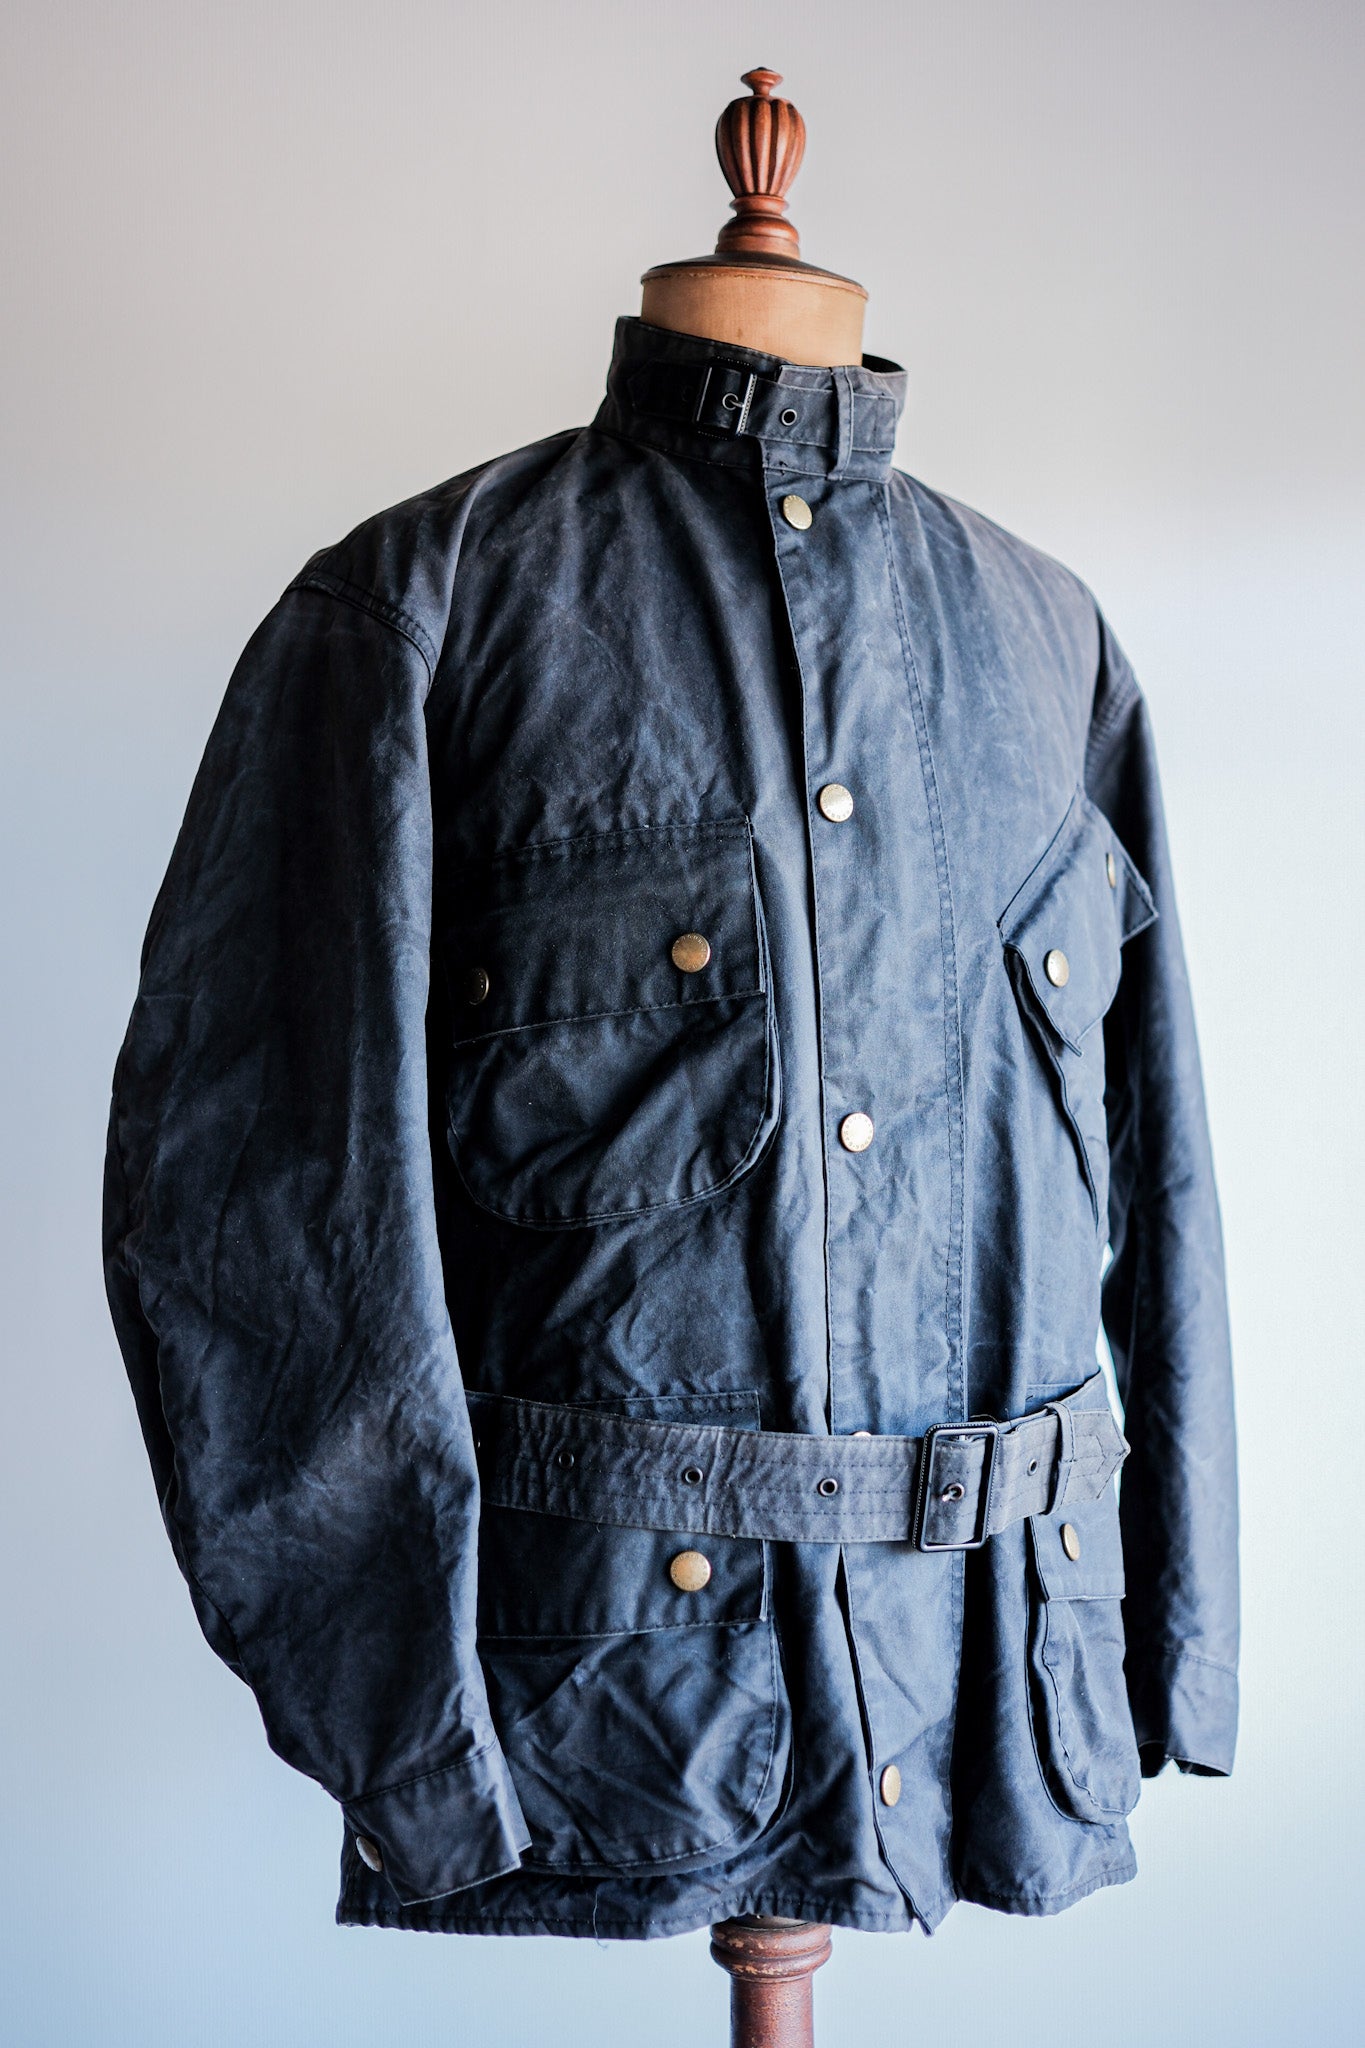 [~ 90's] Barbour Vintage "Beacon Jacket" 3 Crest "Lining ที่ผิดปกติ"